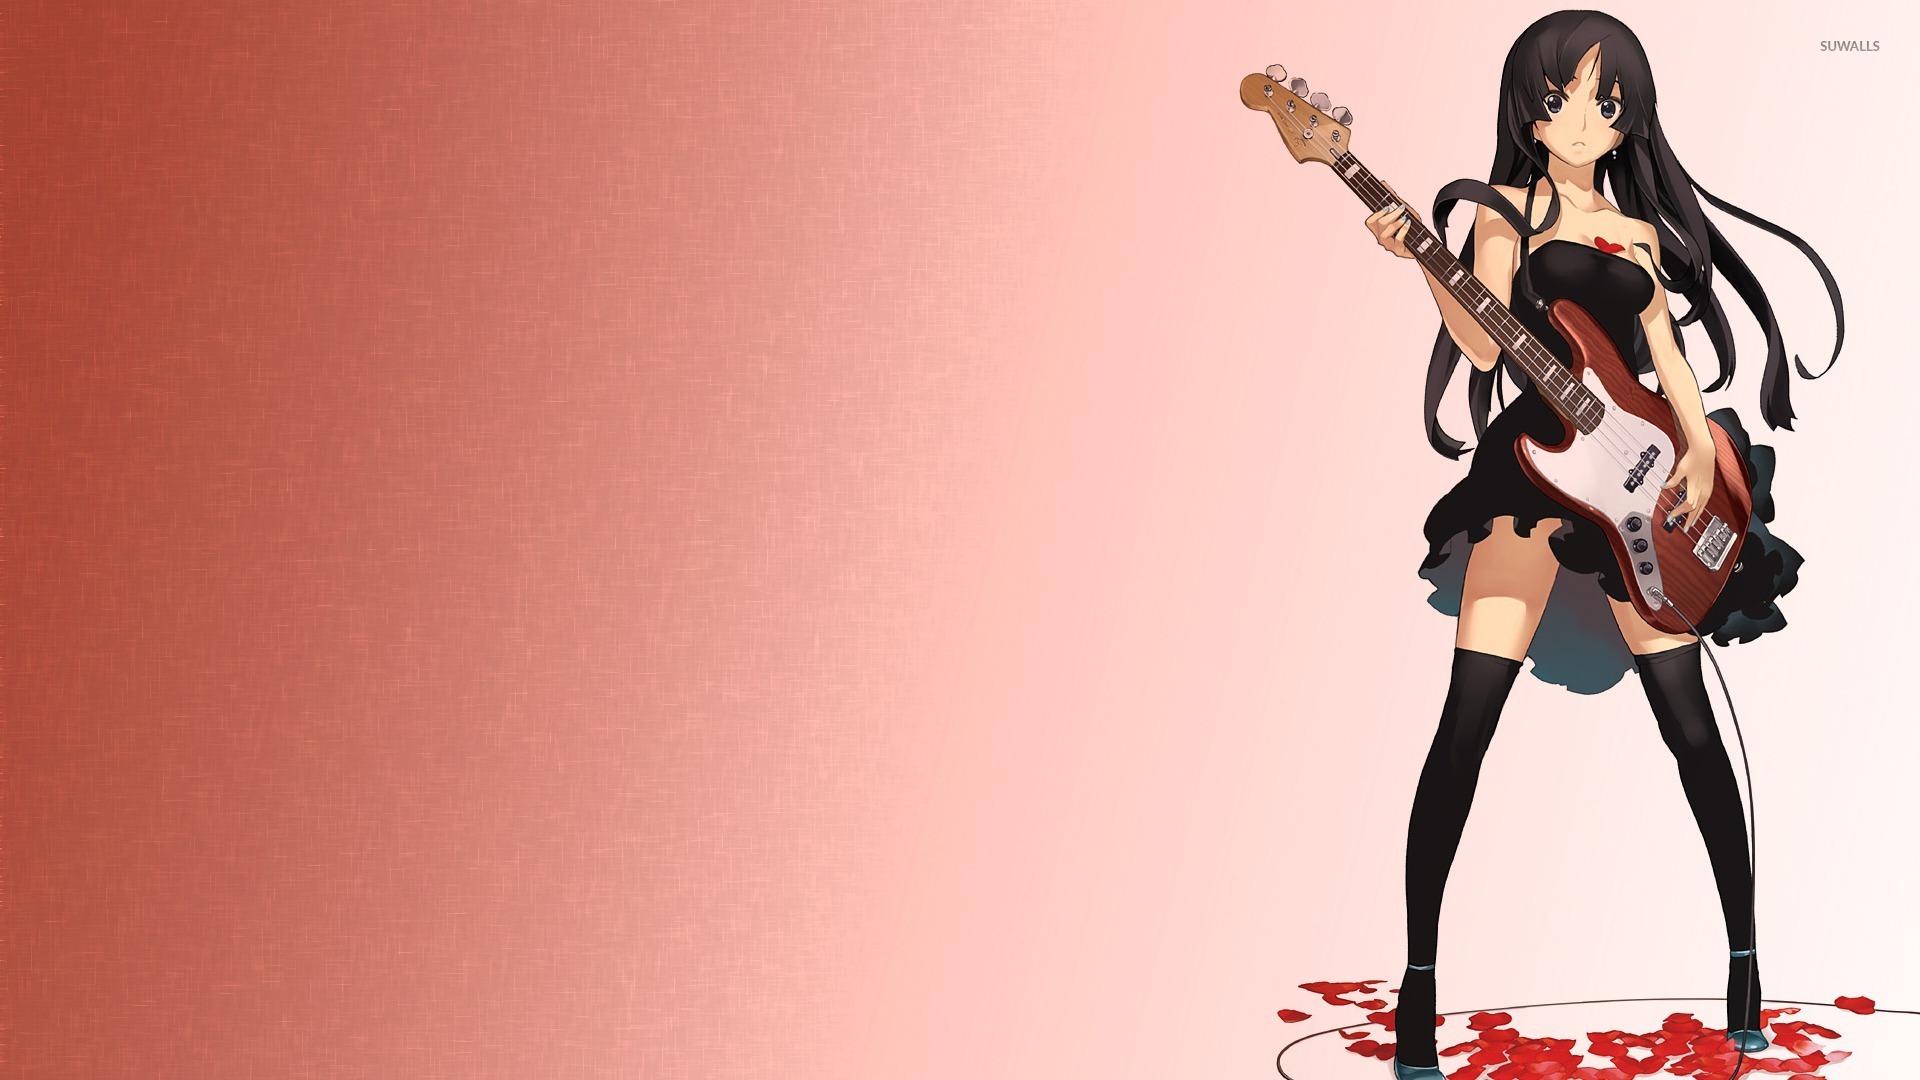 Mio Akiyama with a guitar - K-On! wallpaper - Anime wallpapers - #50079